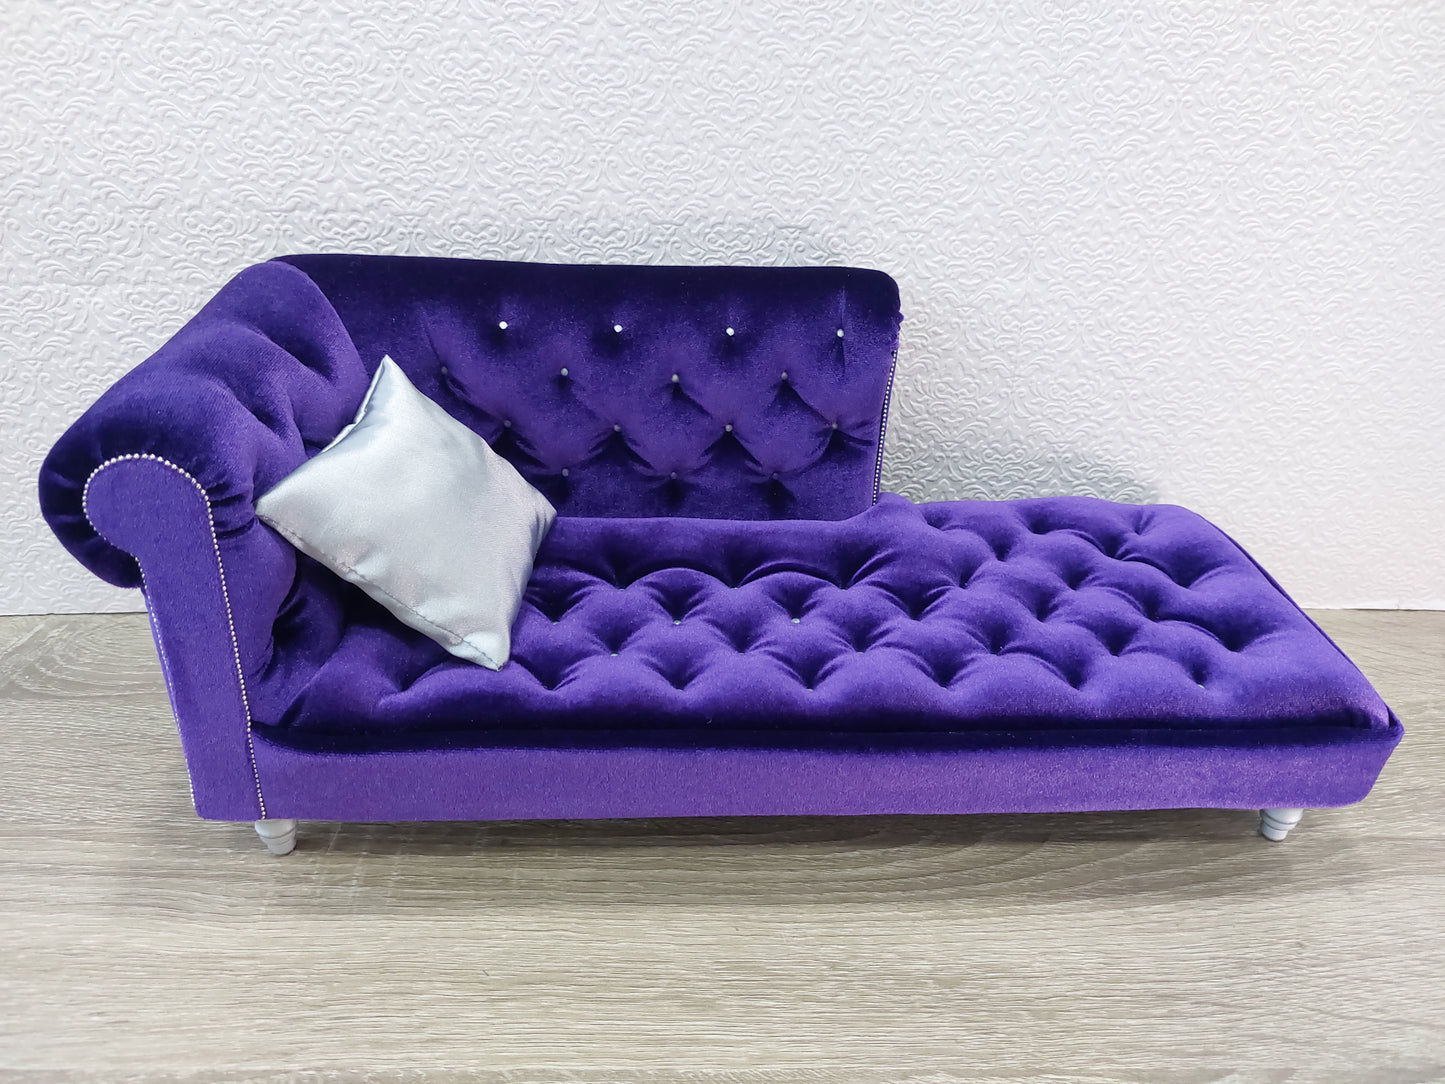 Chesterfield chaise lounge, purple velvet